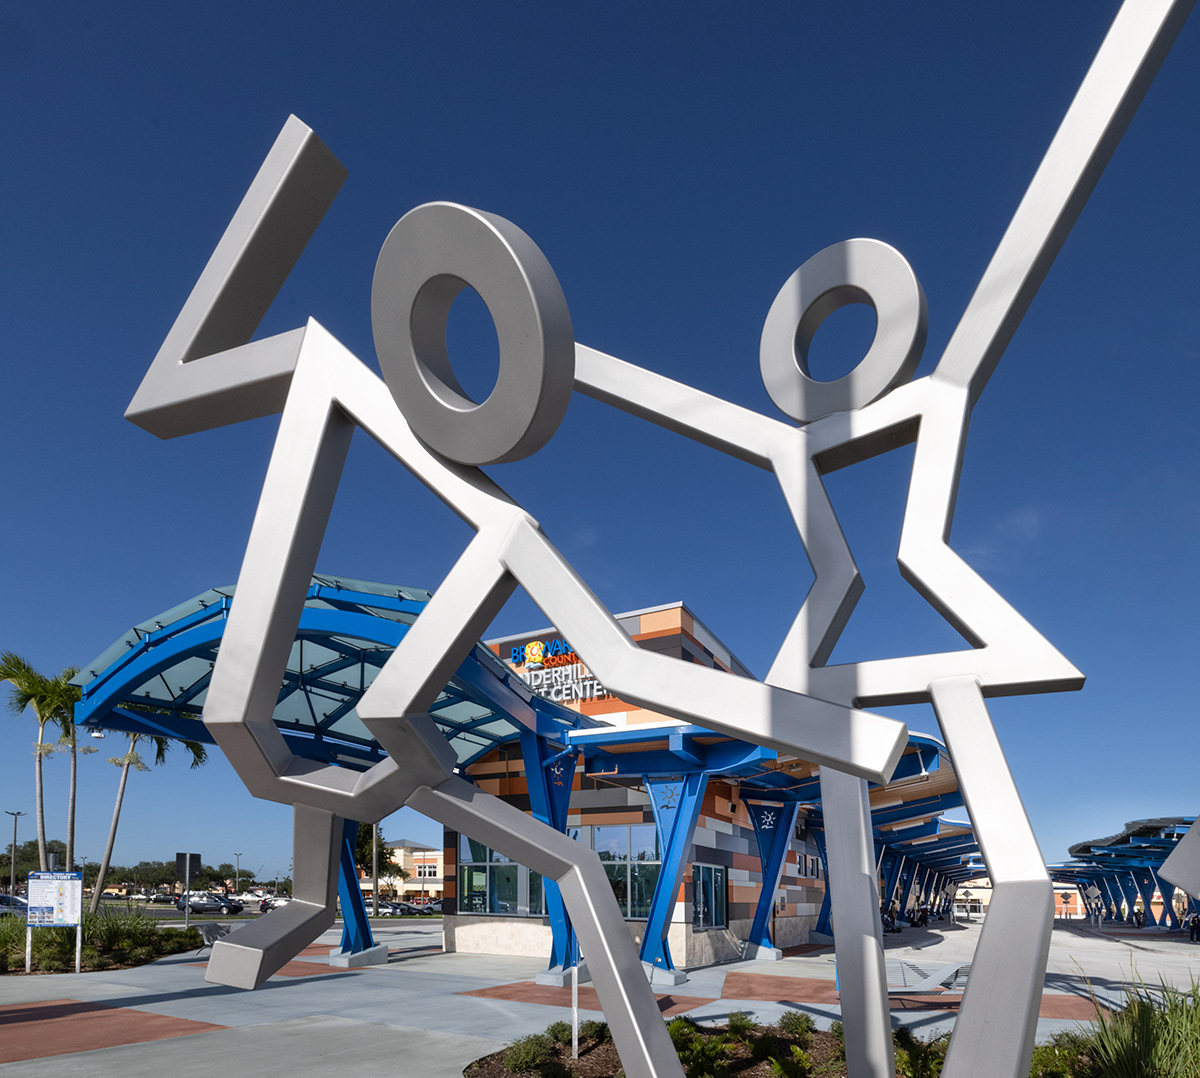 Metal sculpture at the Lauderhill Transit Center in Lauderhill, FL